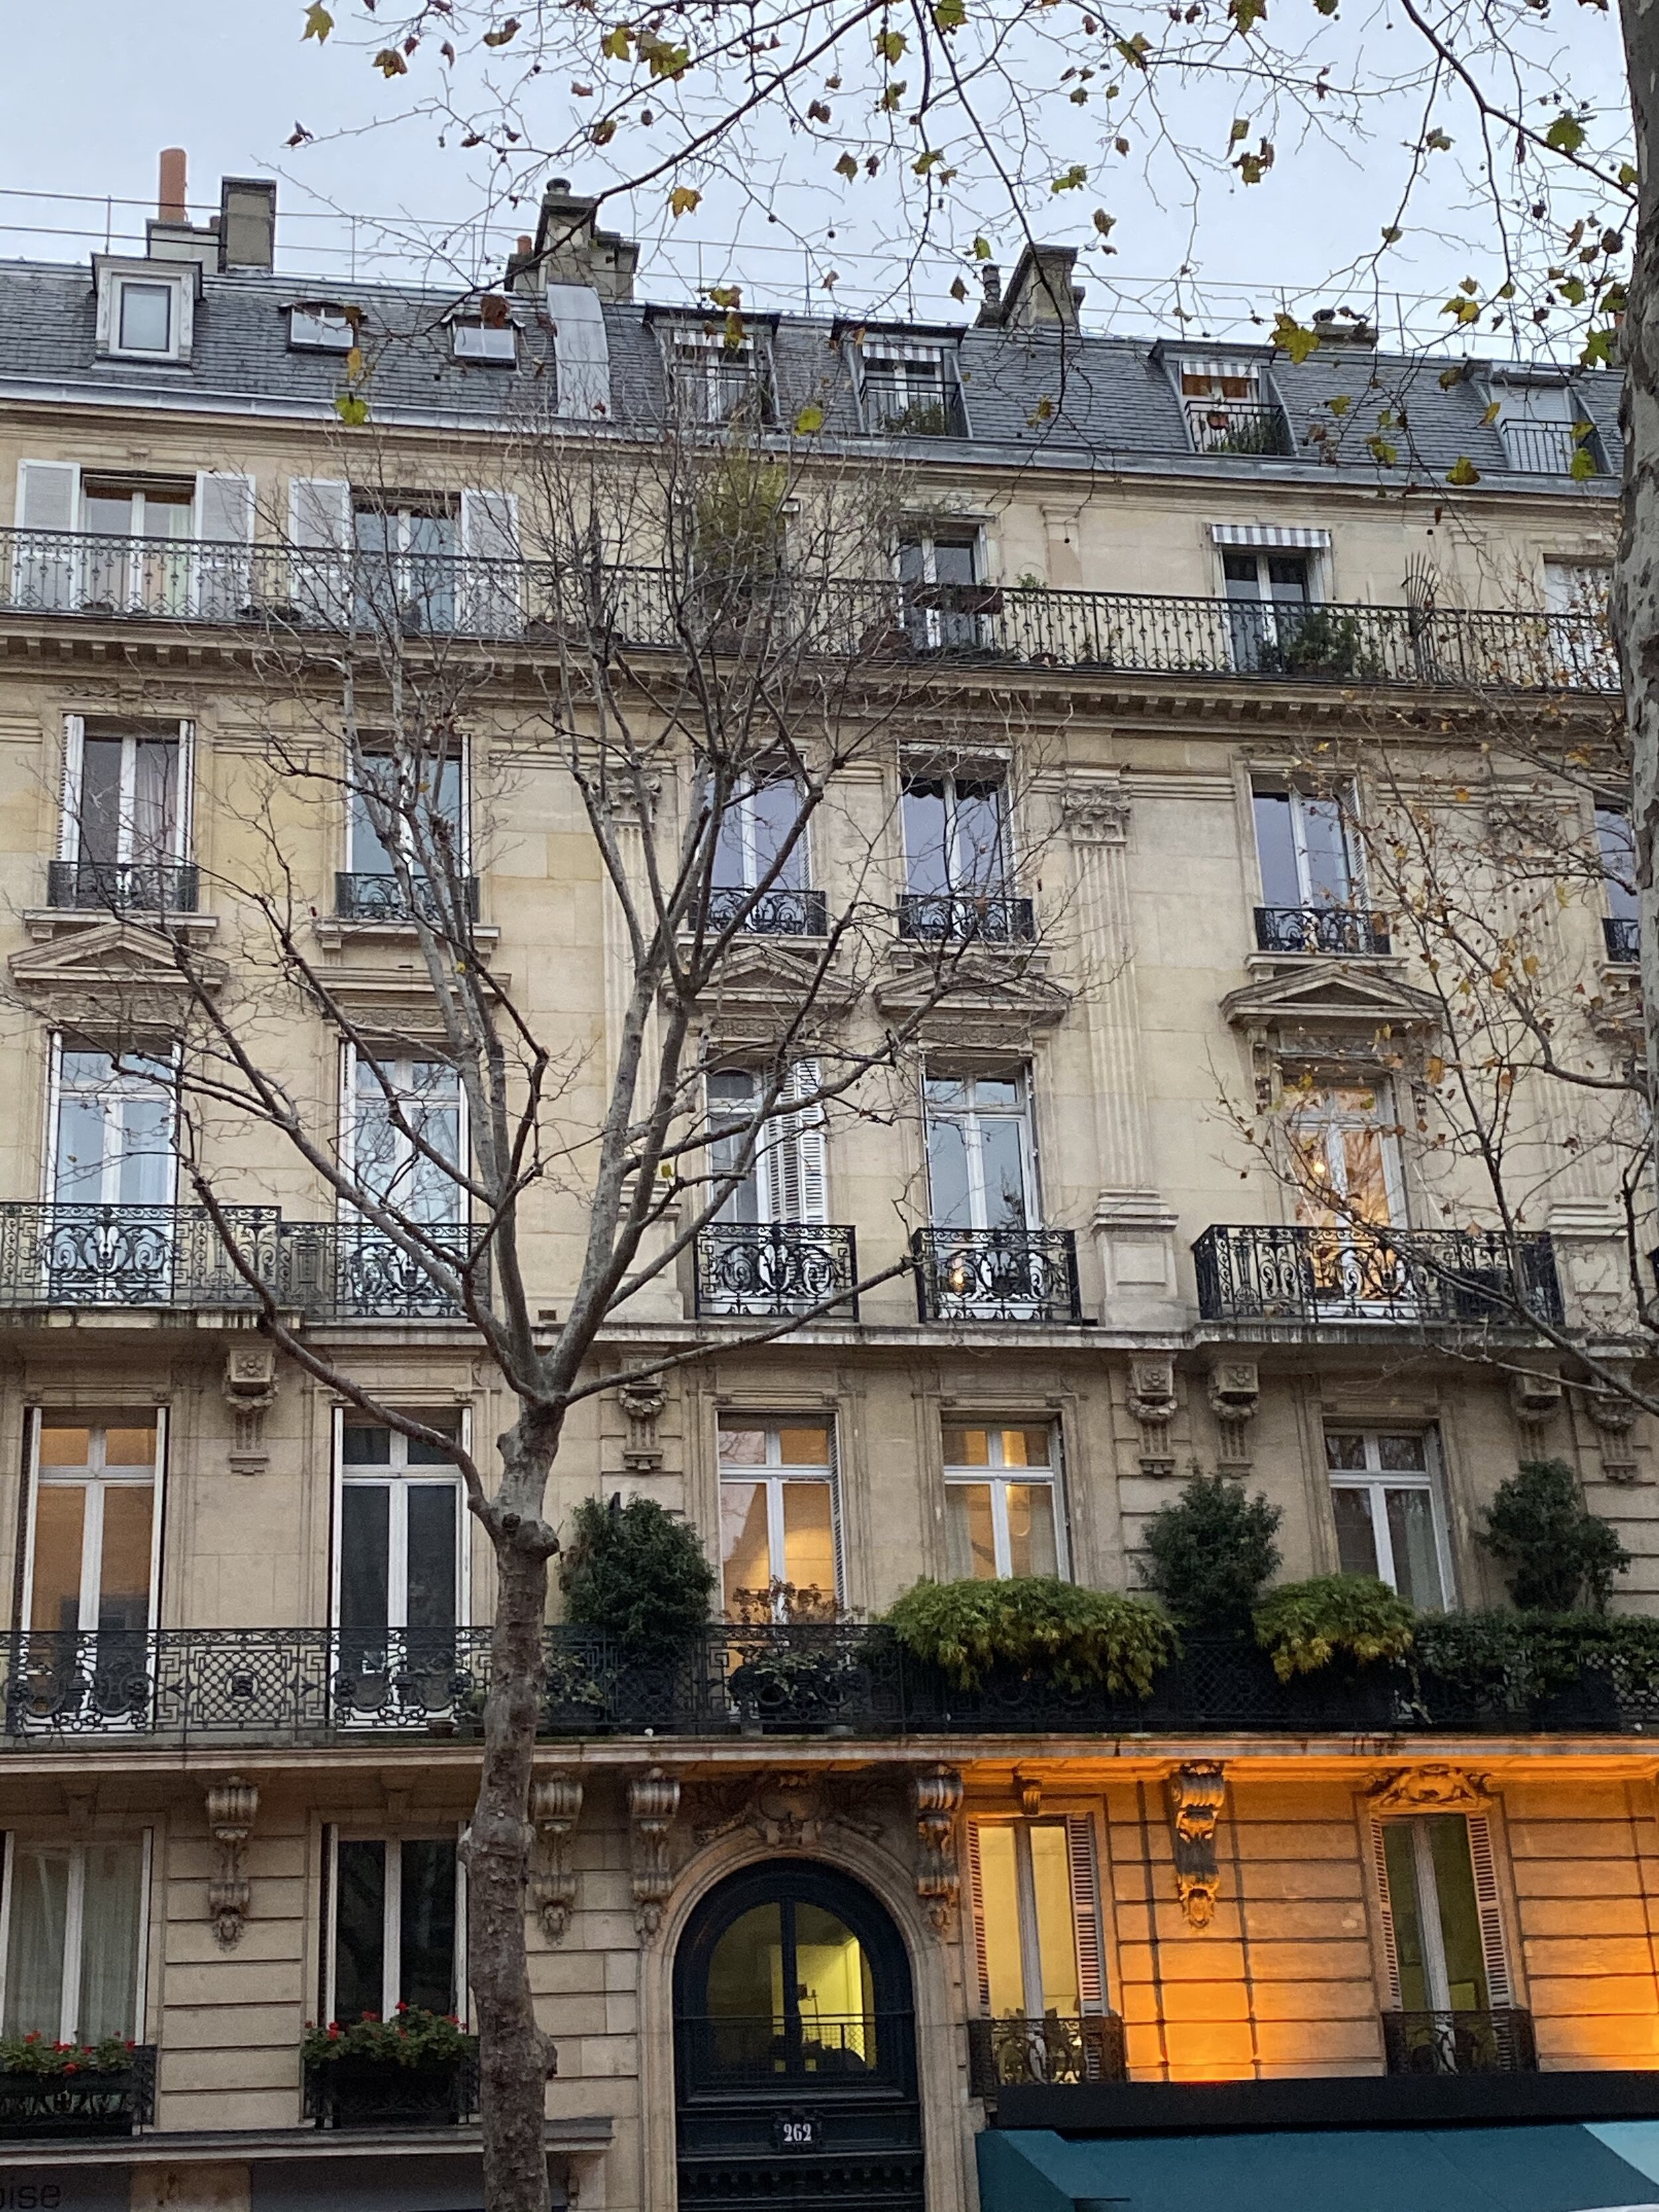 PARIS DAY 4 HOTEL CRILLON — The French Tangerine